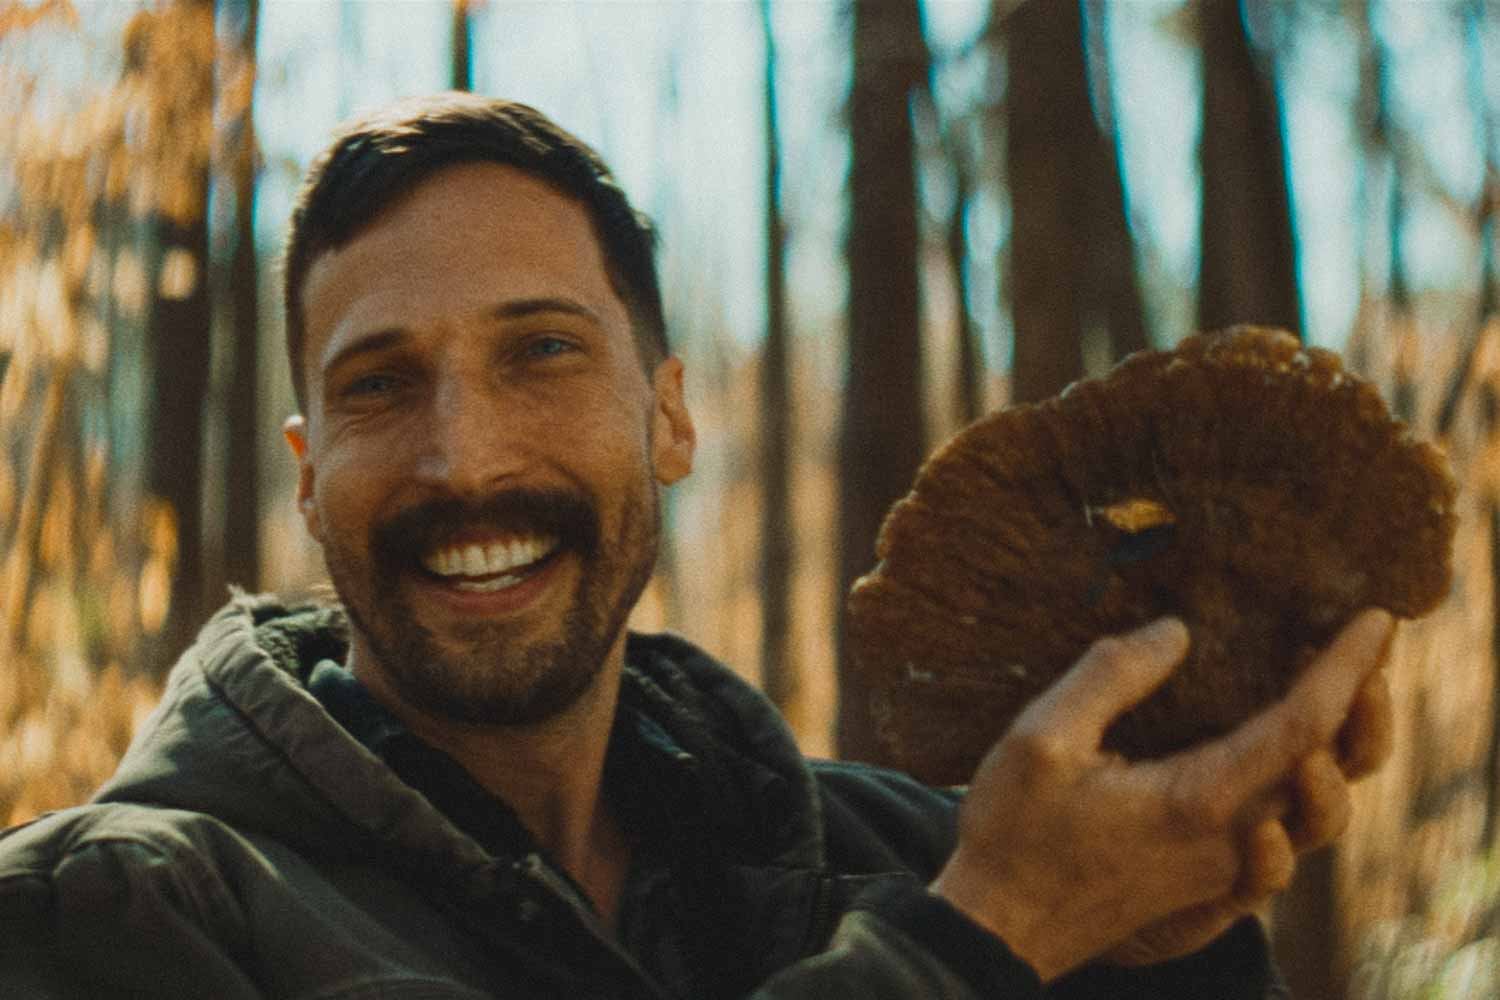 A smiling man holding up a freshly harvested mushroom